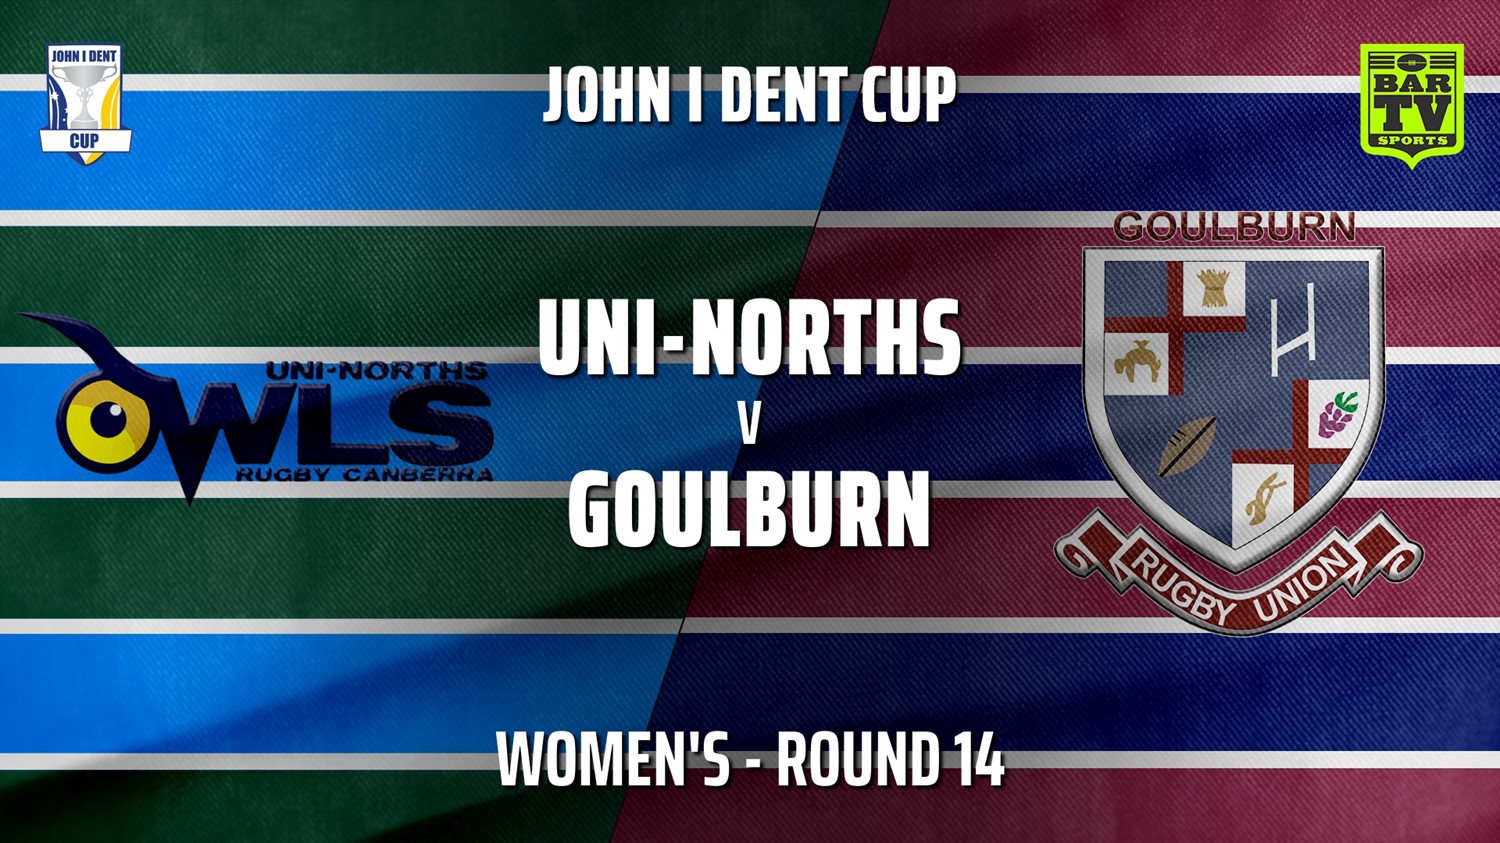 210807-John I Dent (ACT) Round 14 - Women's - UNI-Norths v Goulburn Minigame Slate Image